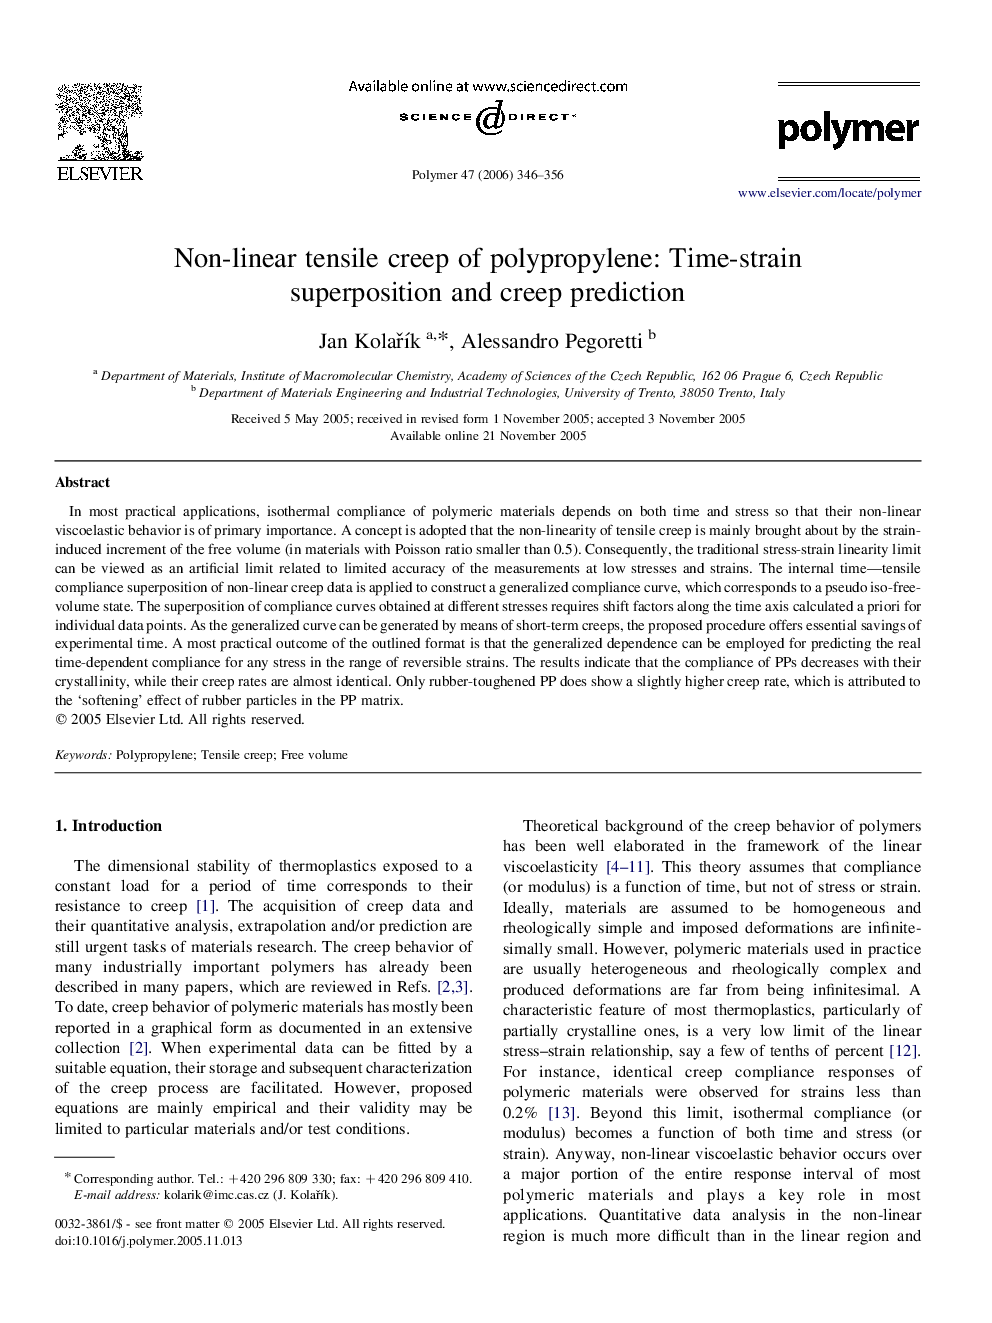 Non-linear tensile creep of polypropylene: Time-strain superposition and creep prediction